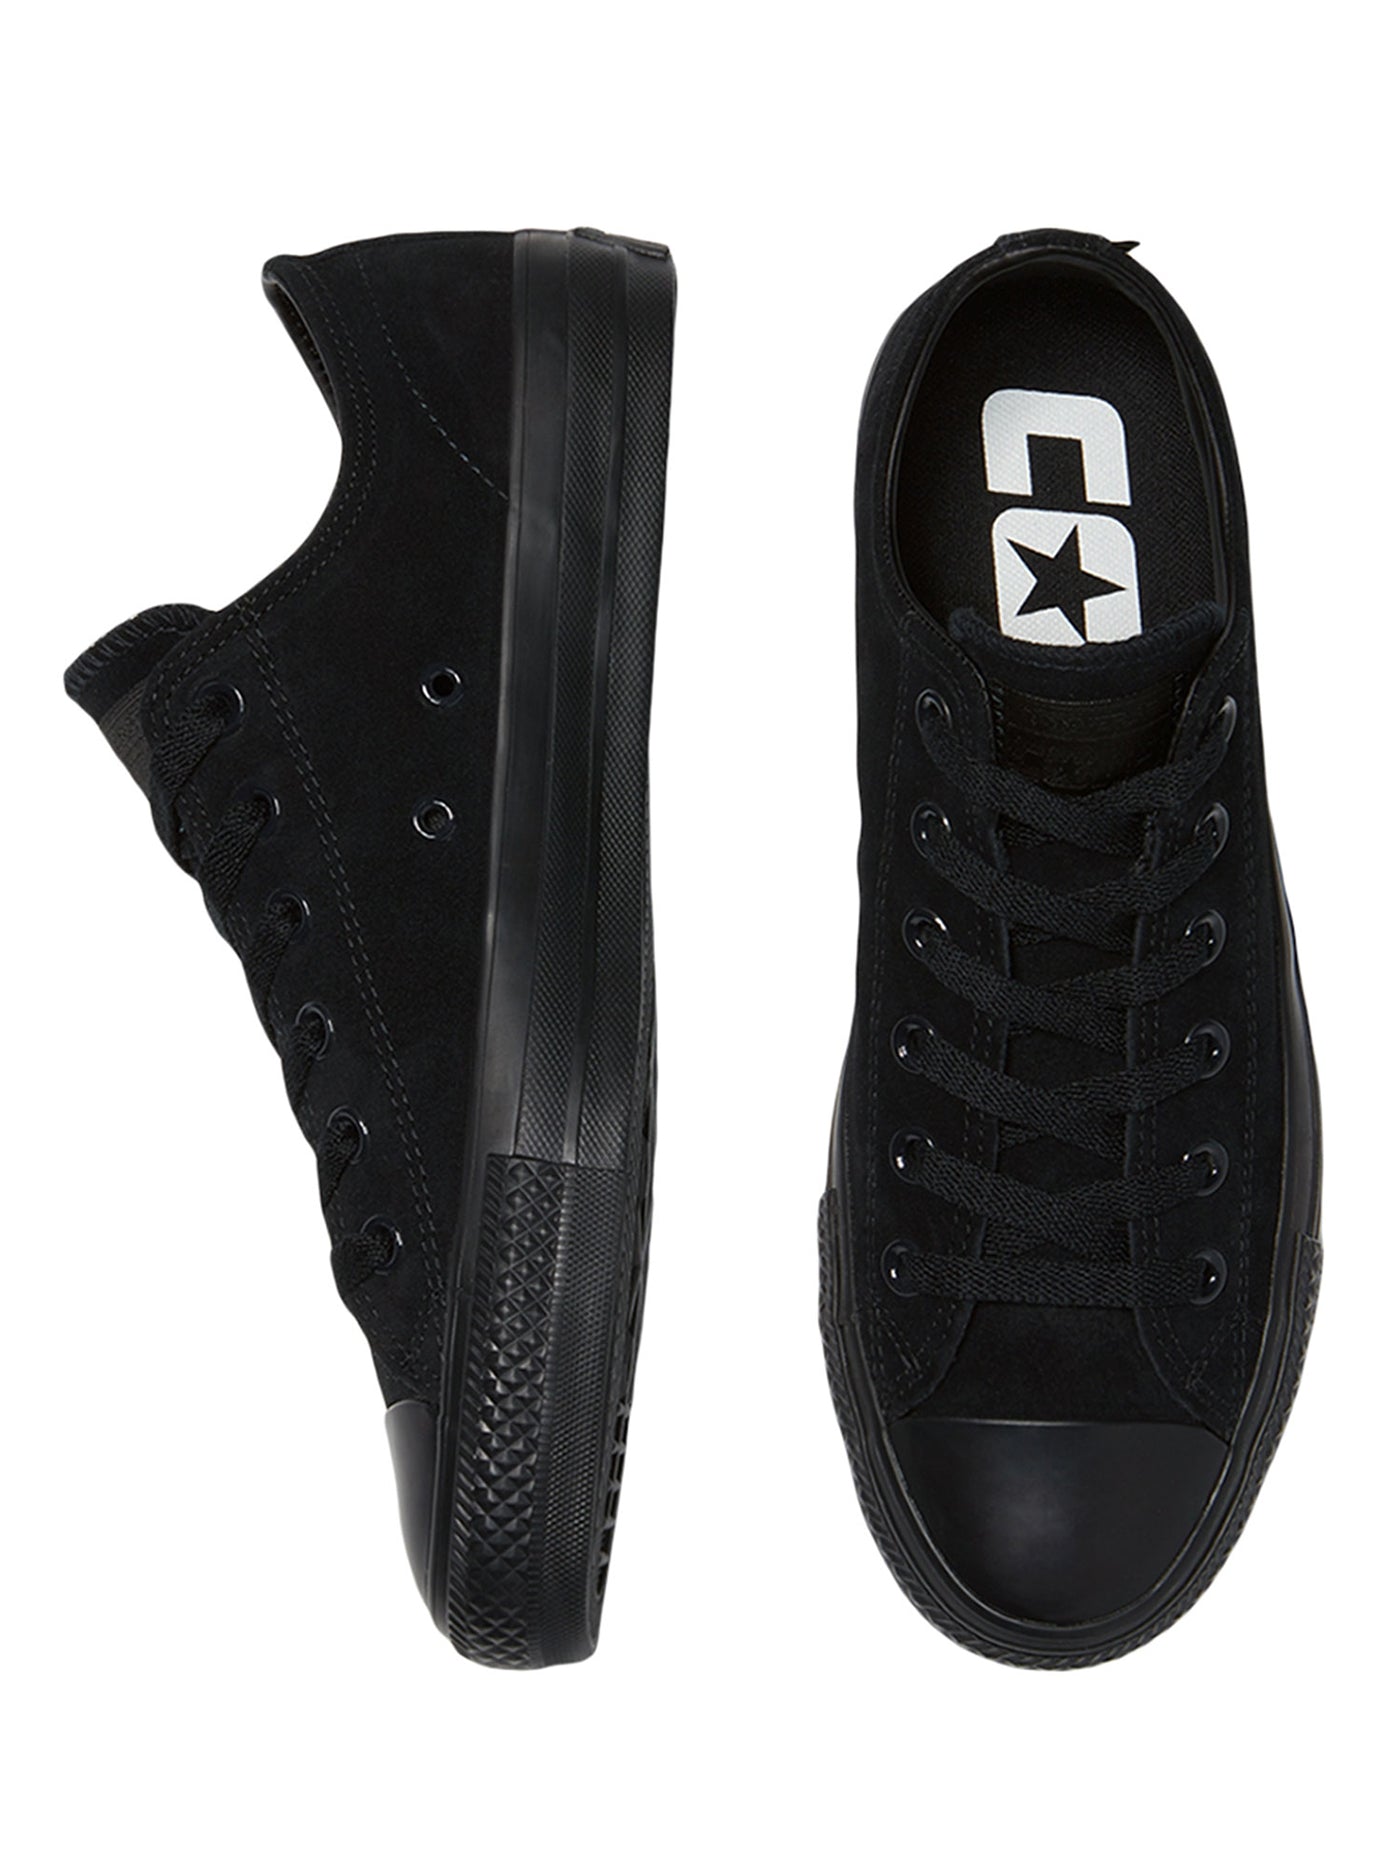 Converse Chuck Taylor All Star Pro OX Black/Black/Black Shoes